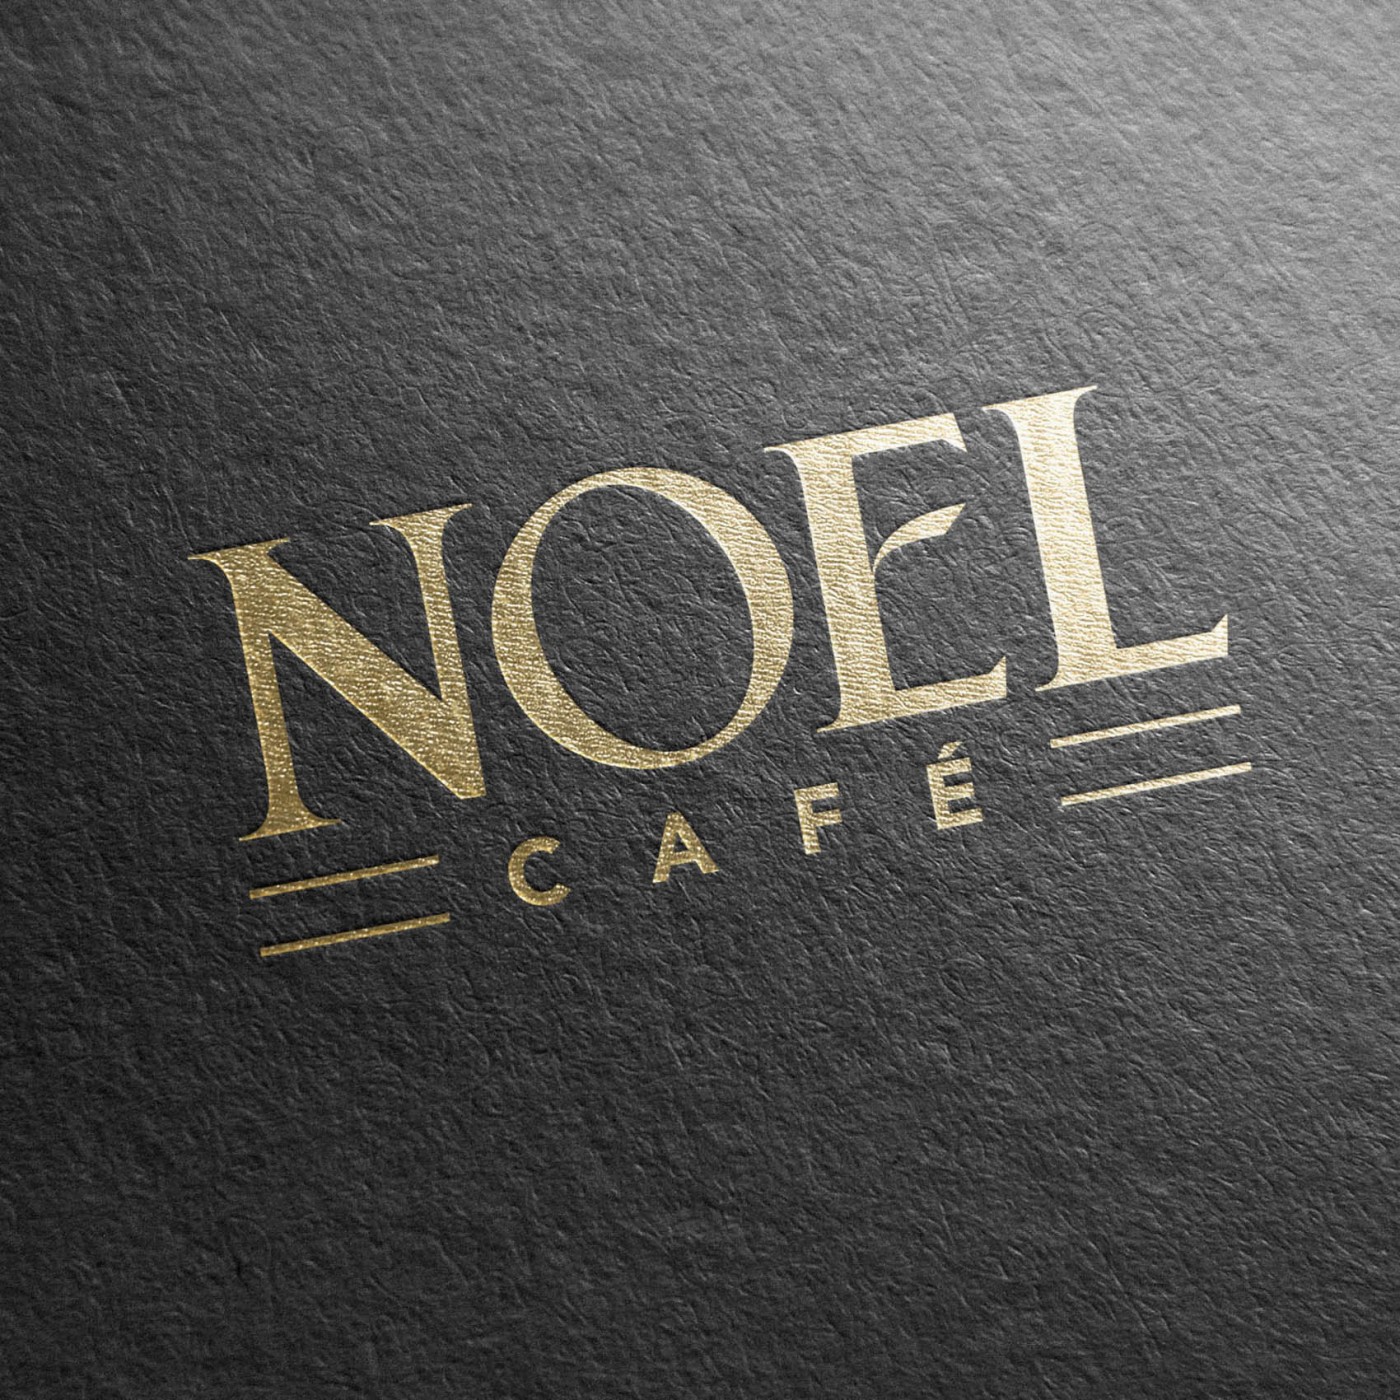 noel cafe - coffee shop logo high end luxury branding barista8